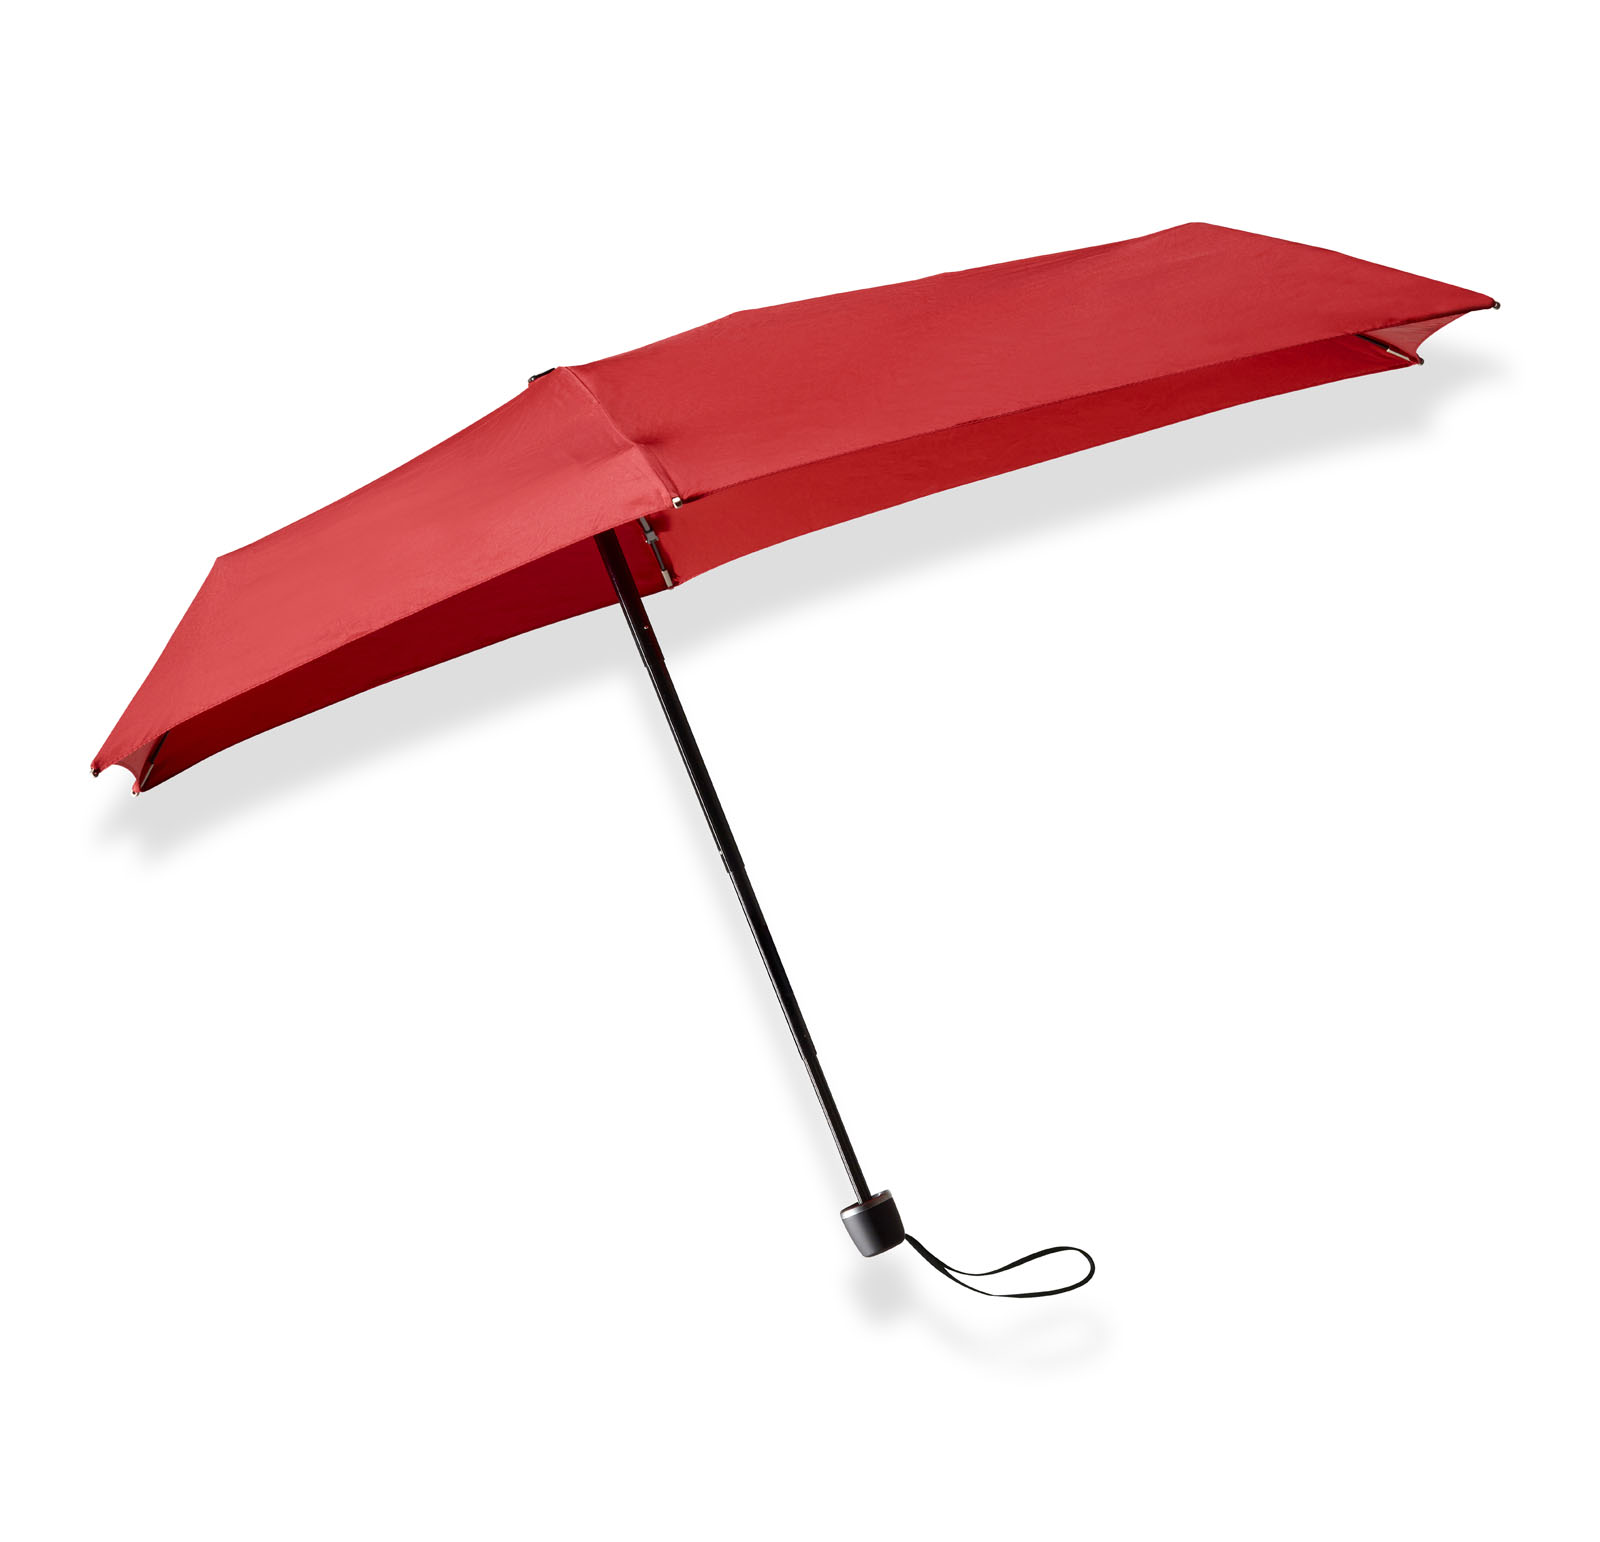 Spektakel draaipunt Vruchtbaar Rode opvouwbare paraplu micro kopen? senz° micro passion red